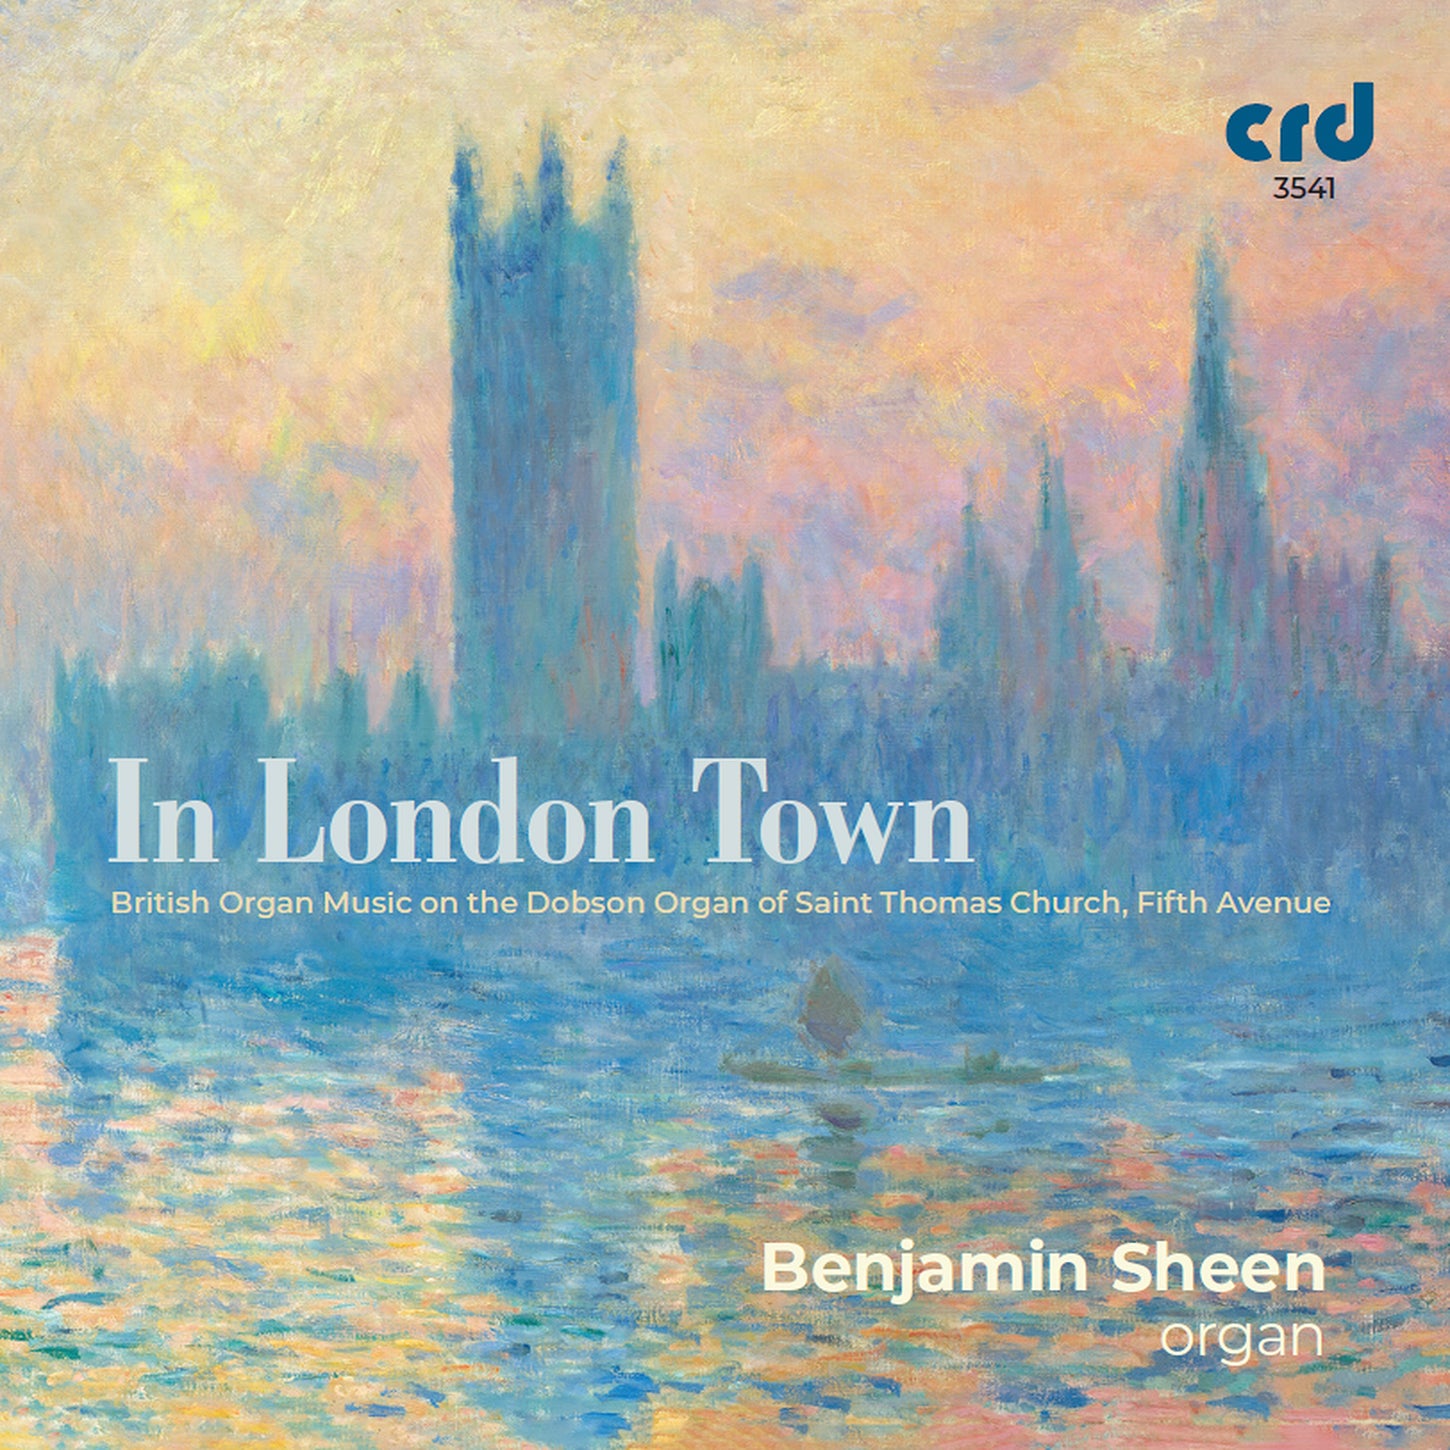 Tallis, Elgar, Howells et al: In London Town - British Organ Music / Sheen